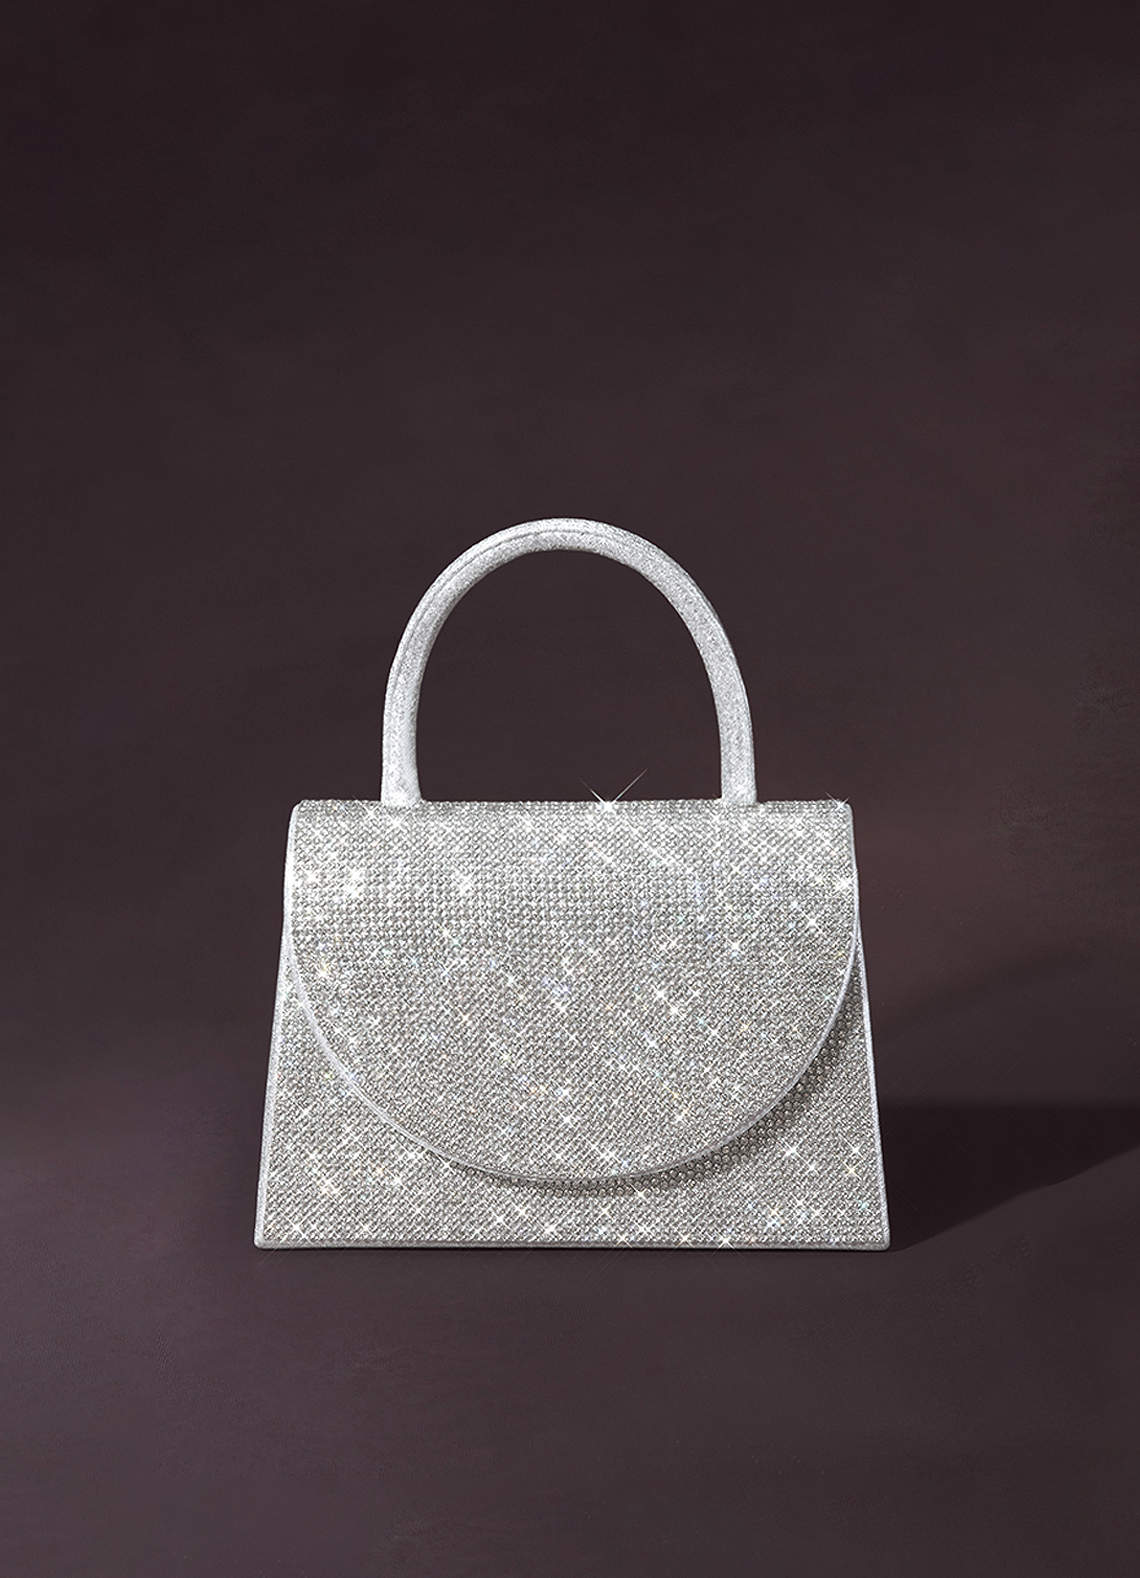 Mulian LilY Black Glitter Clutch Purse For Women Sparkly evening bags Prom  Party Handbag M265: Handbags: Amazon.com